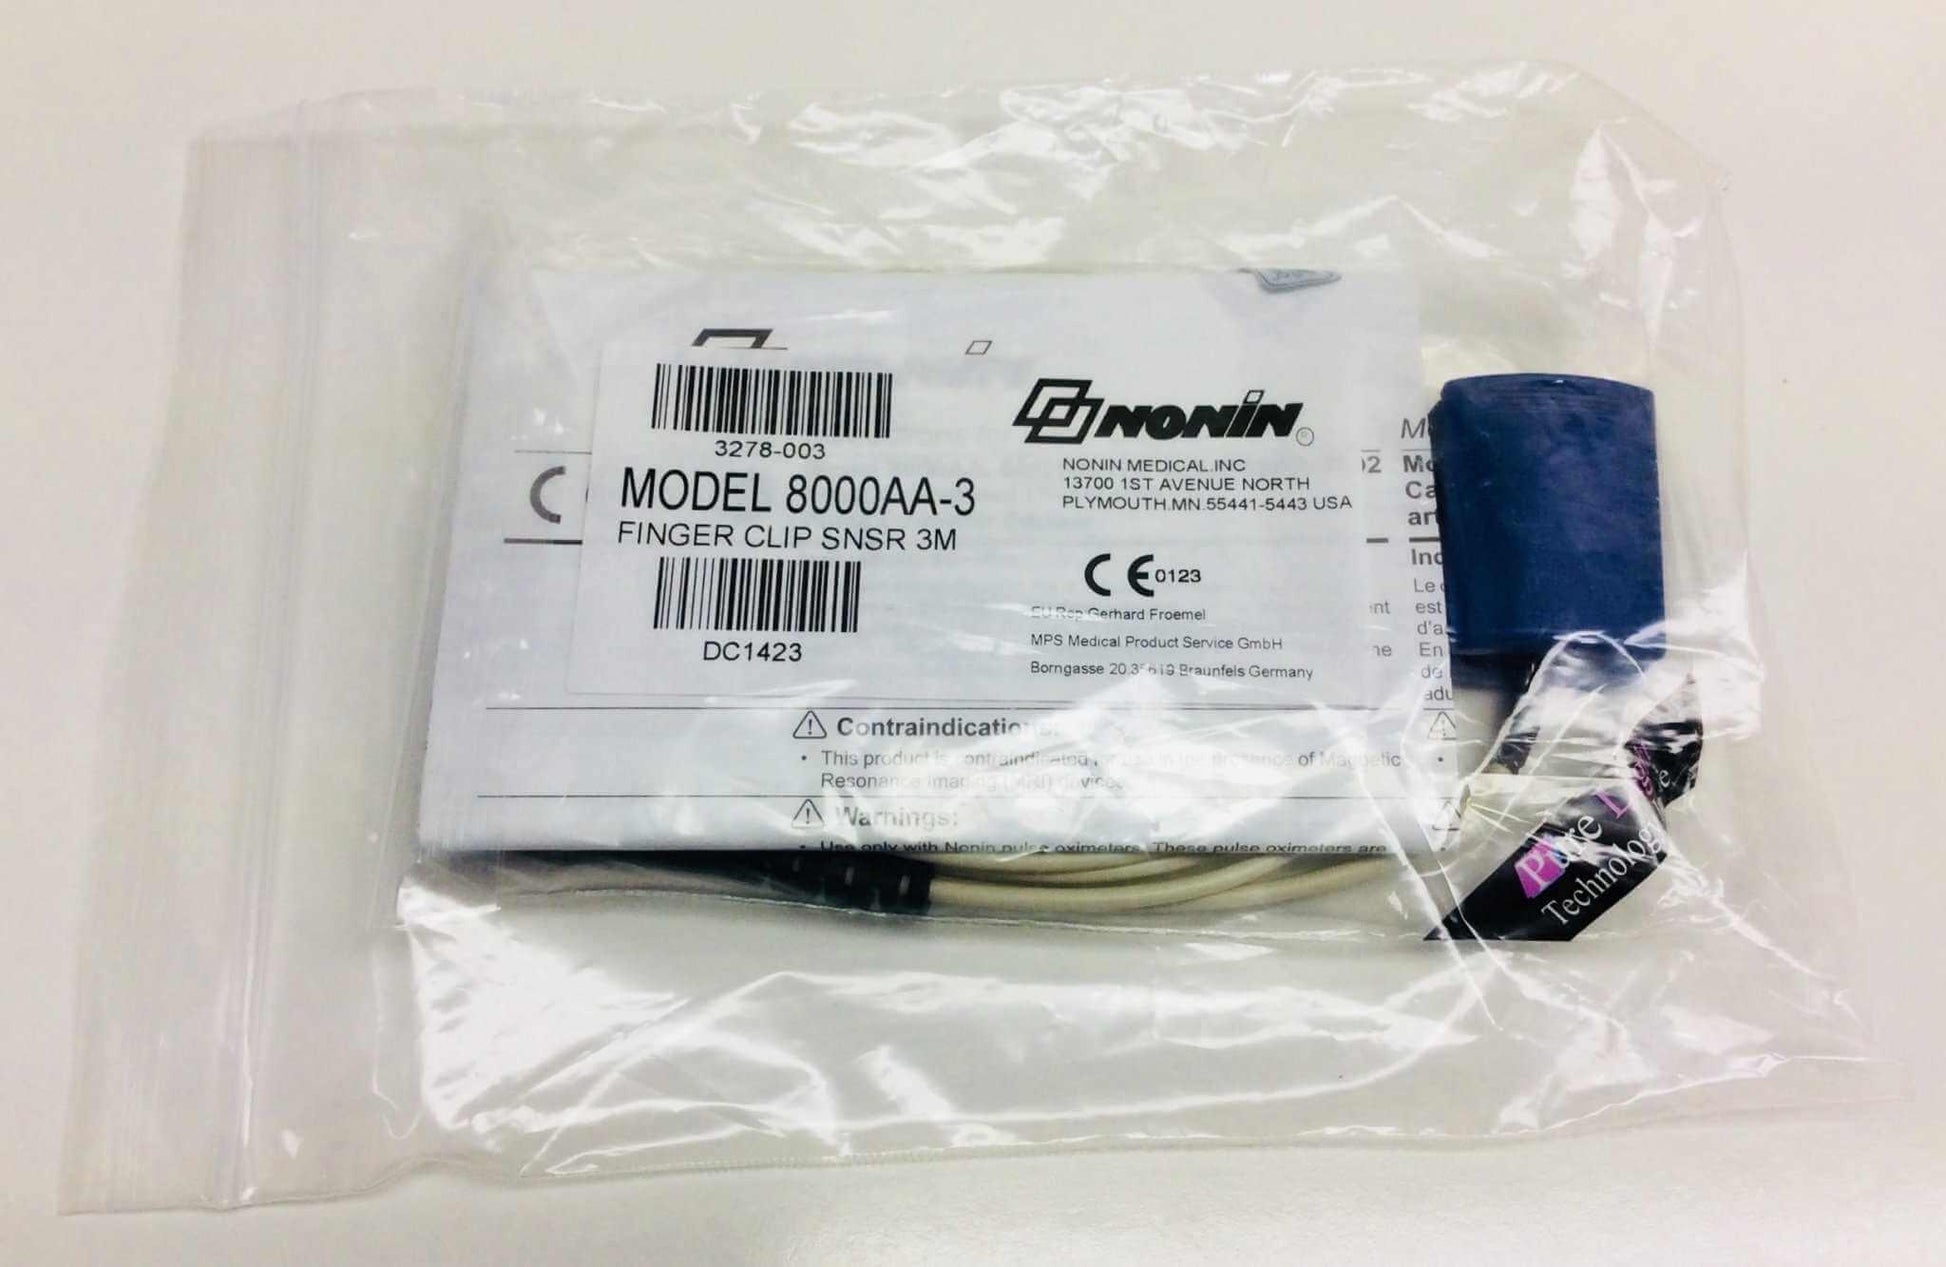 NEW Breas HDM iOxy Pulse Oximeter Sensor with Nonin Purelight SpO2 Flex Finger Probe Kit 005067 Warranty FREE Shipping - MBR Medicals